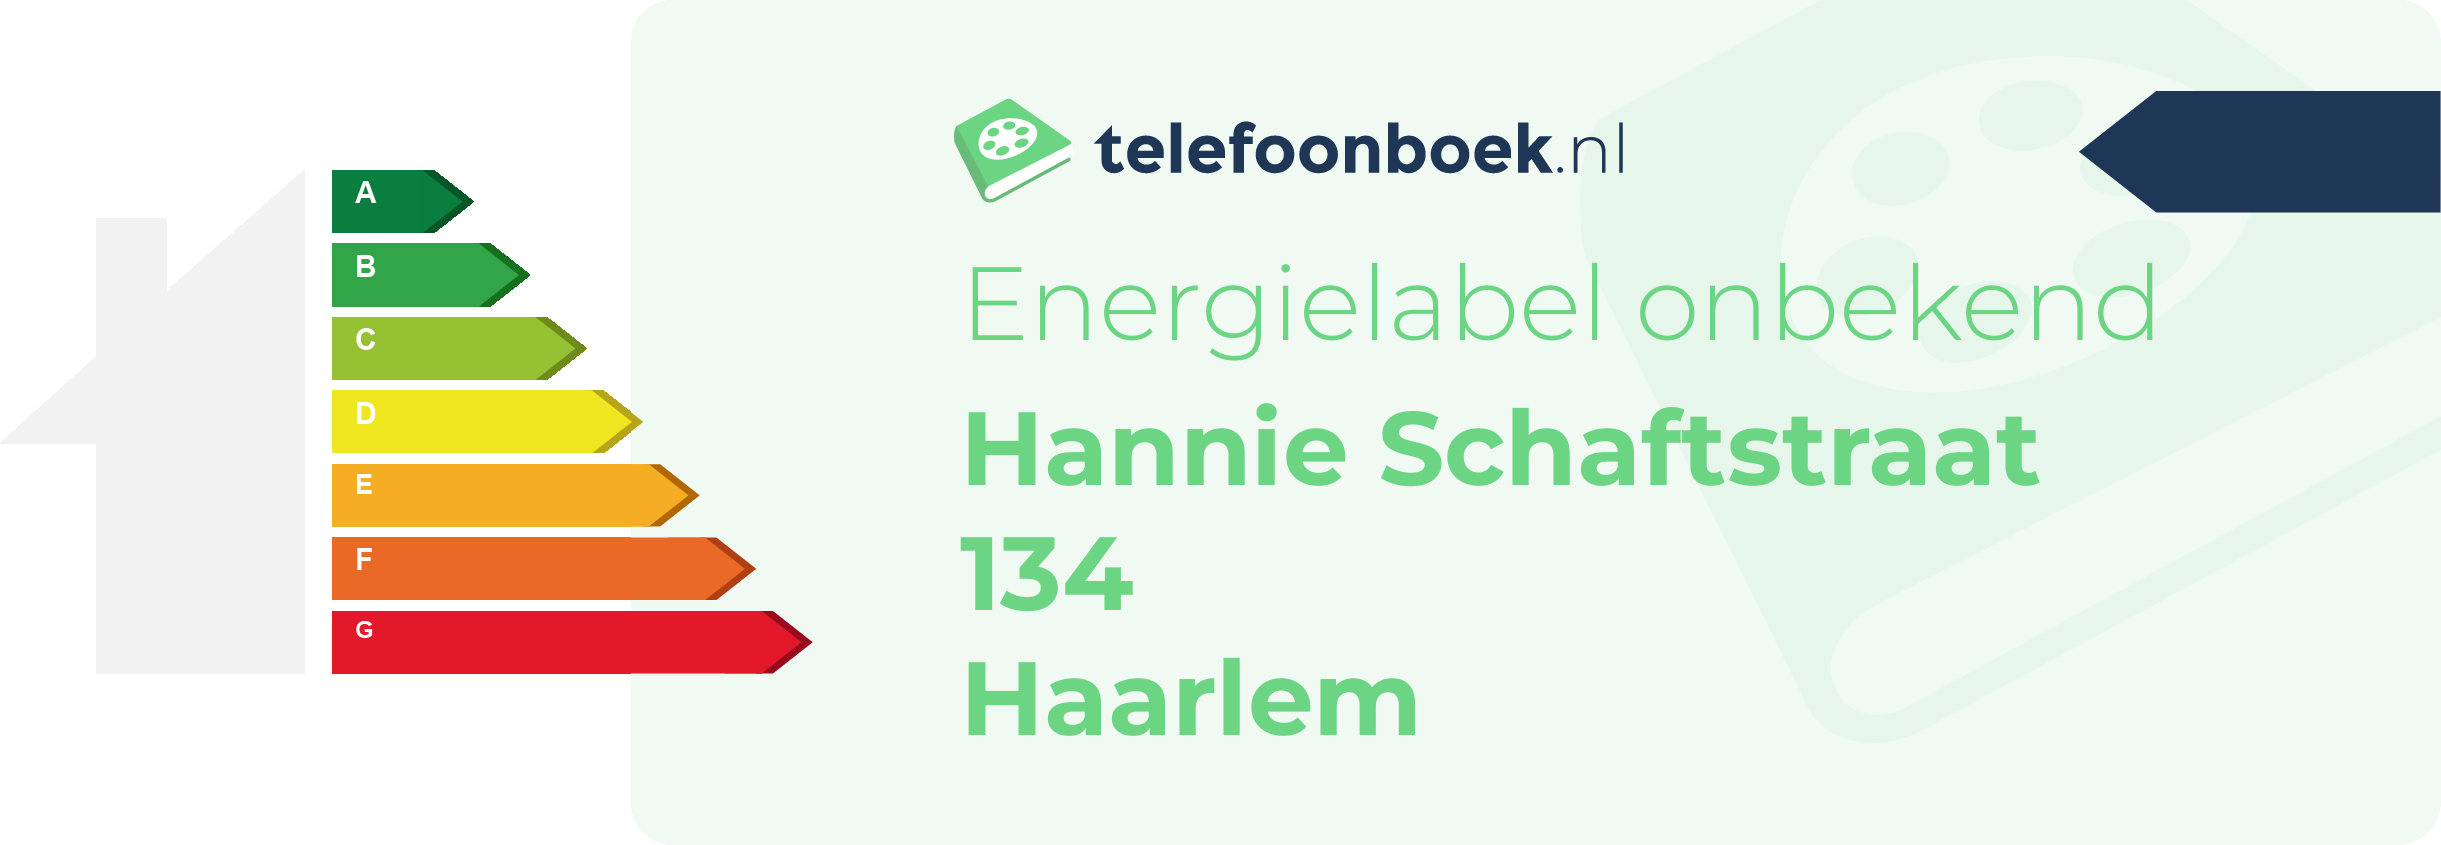 Energielabel Hannie Schaftstraat 134 Haarlem